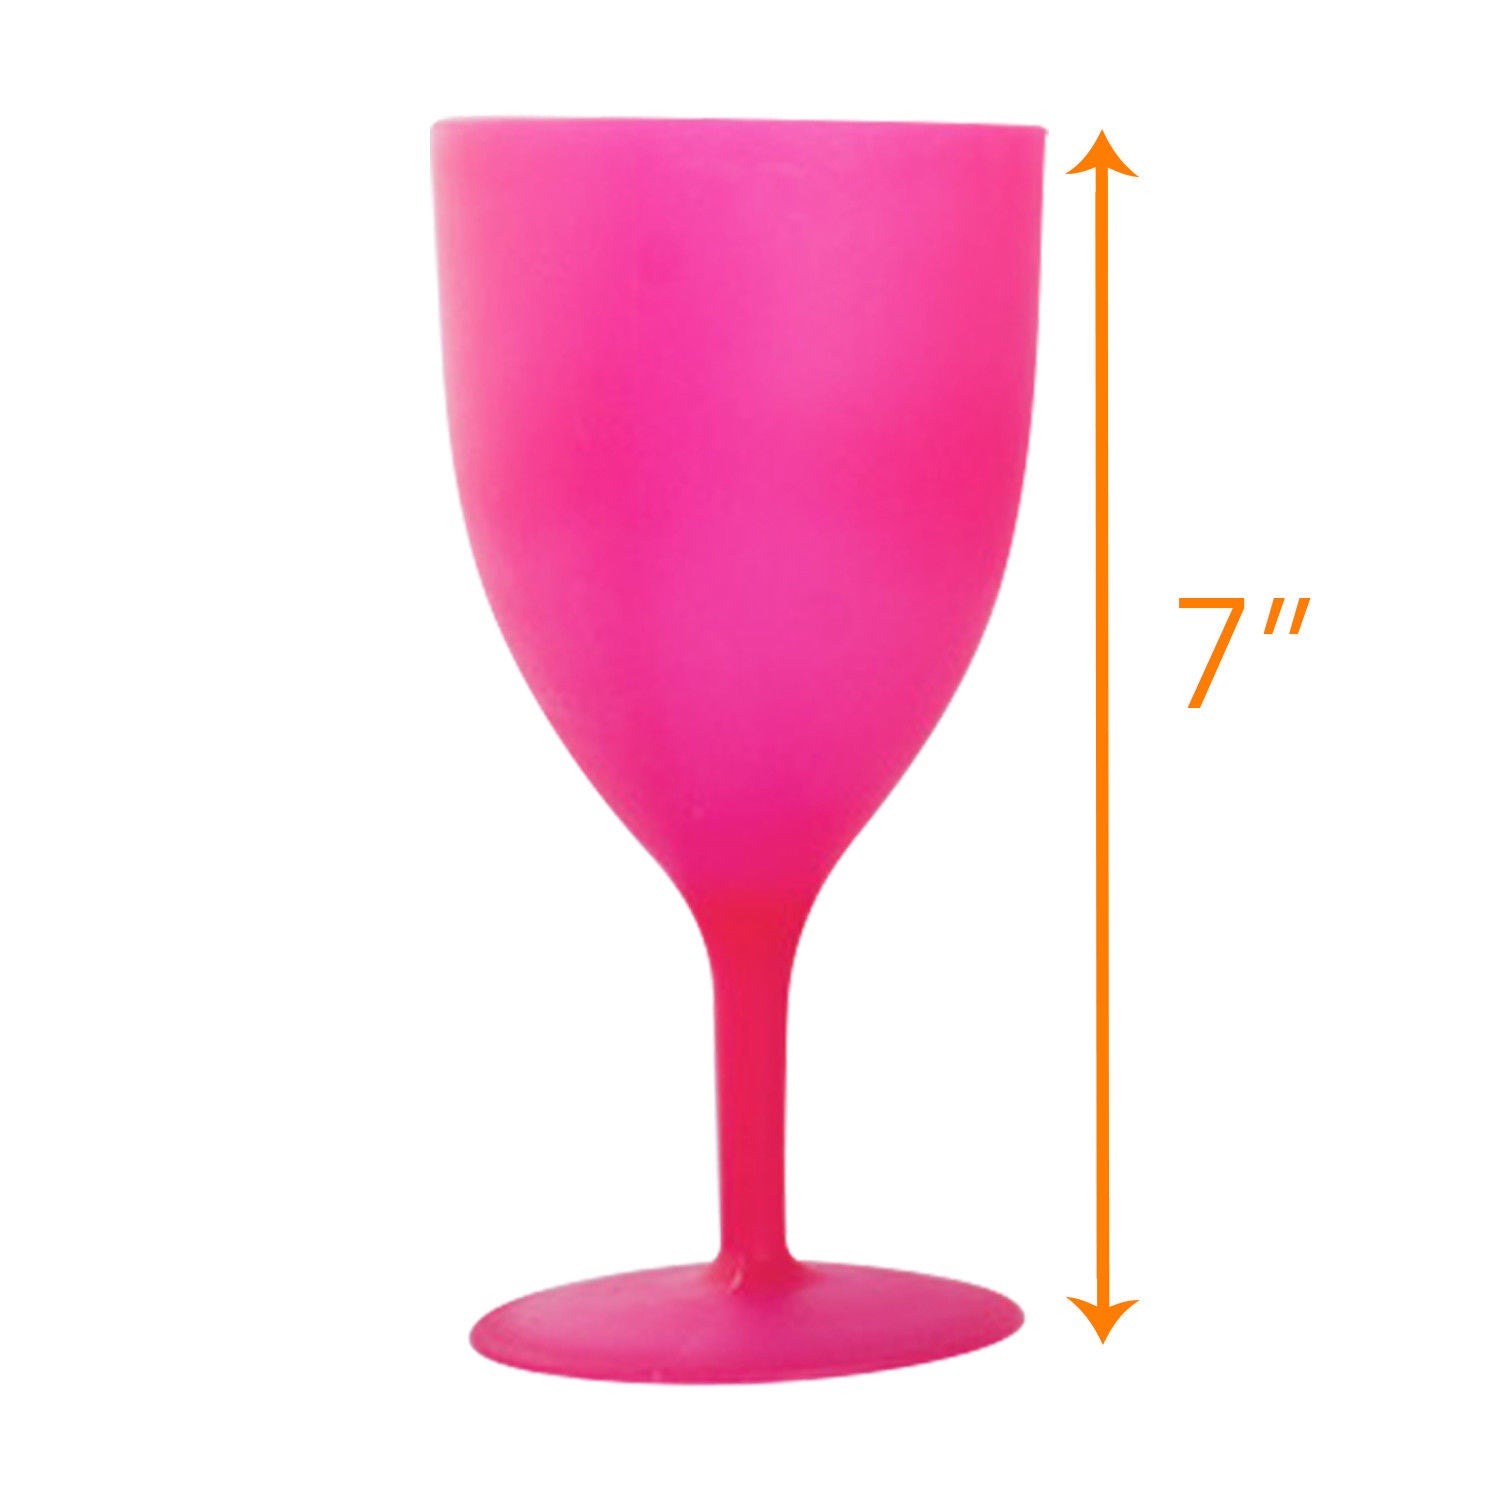 Colorful Reusable Plastic Picnic Goblets Wine Glasses Set Assorted Color 6 Pack